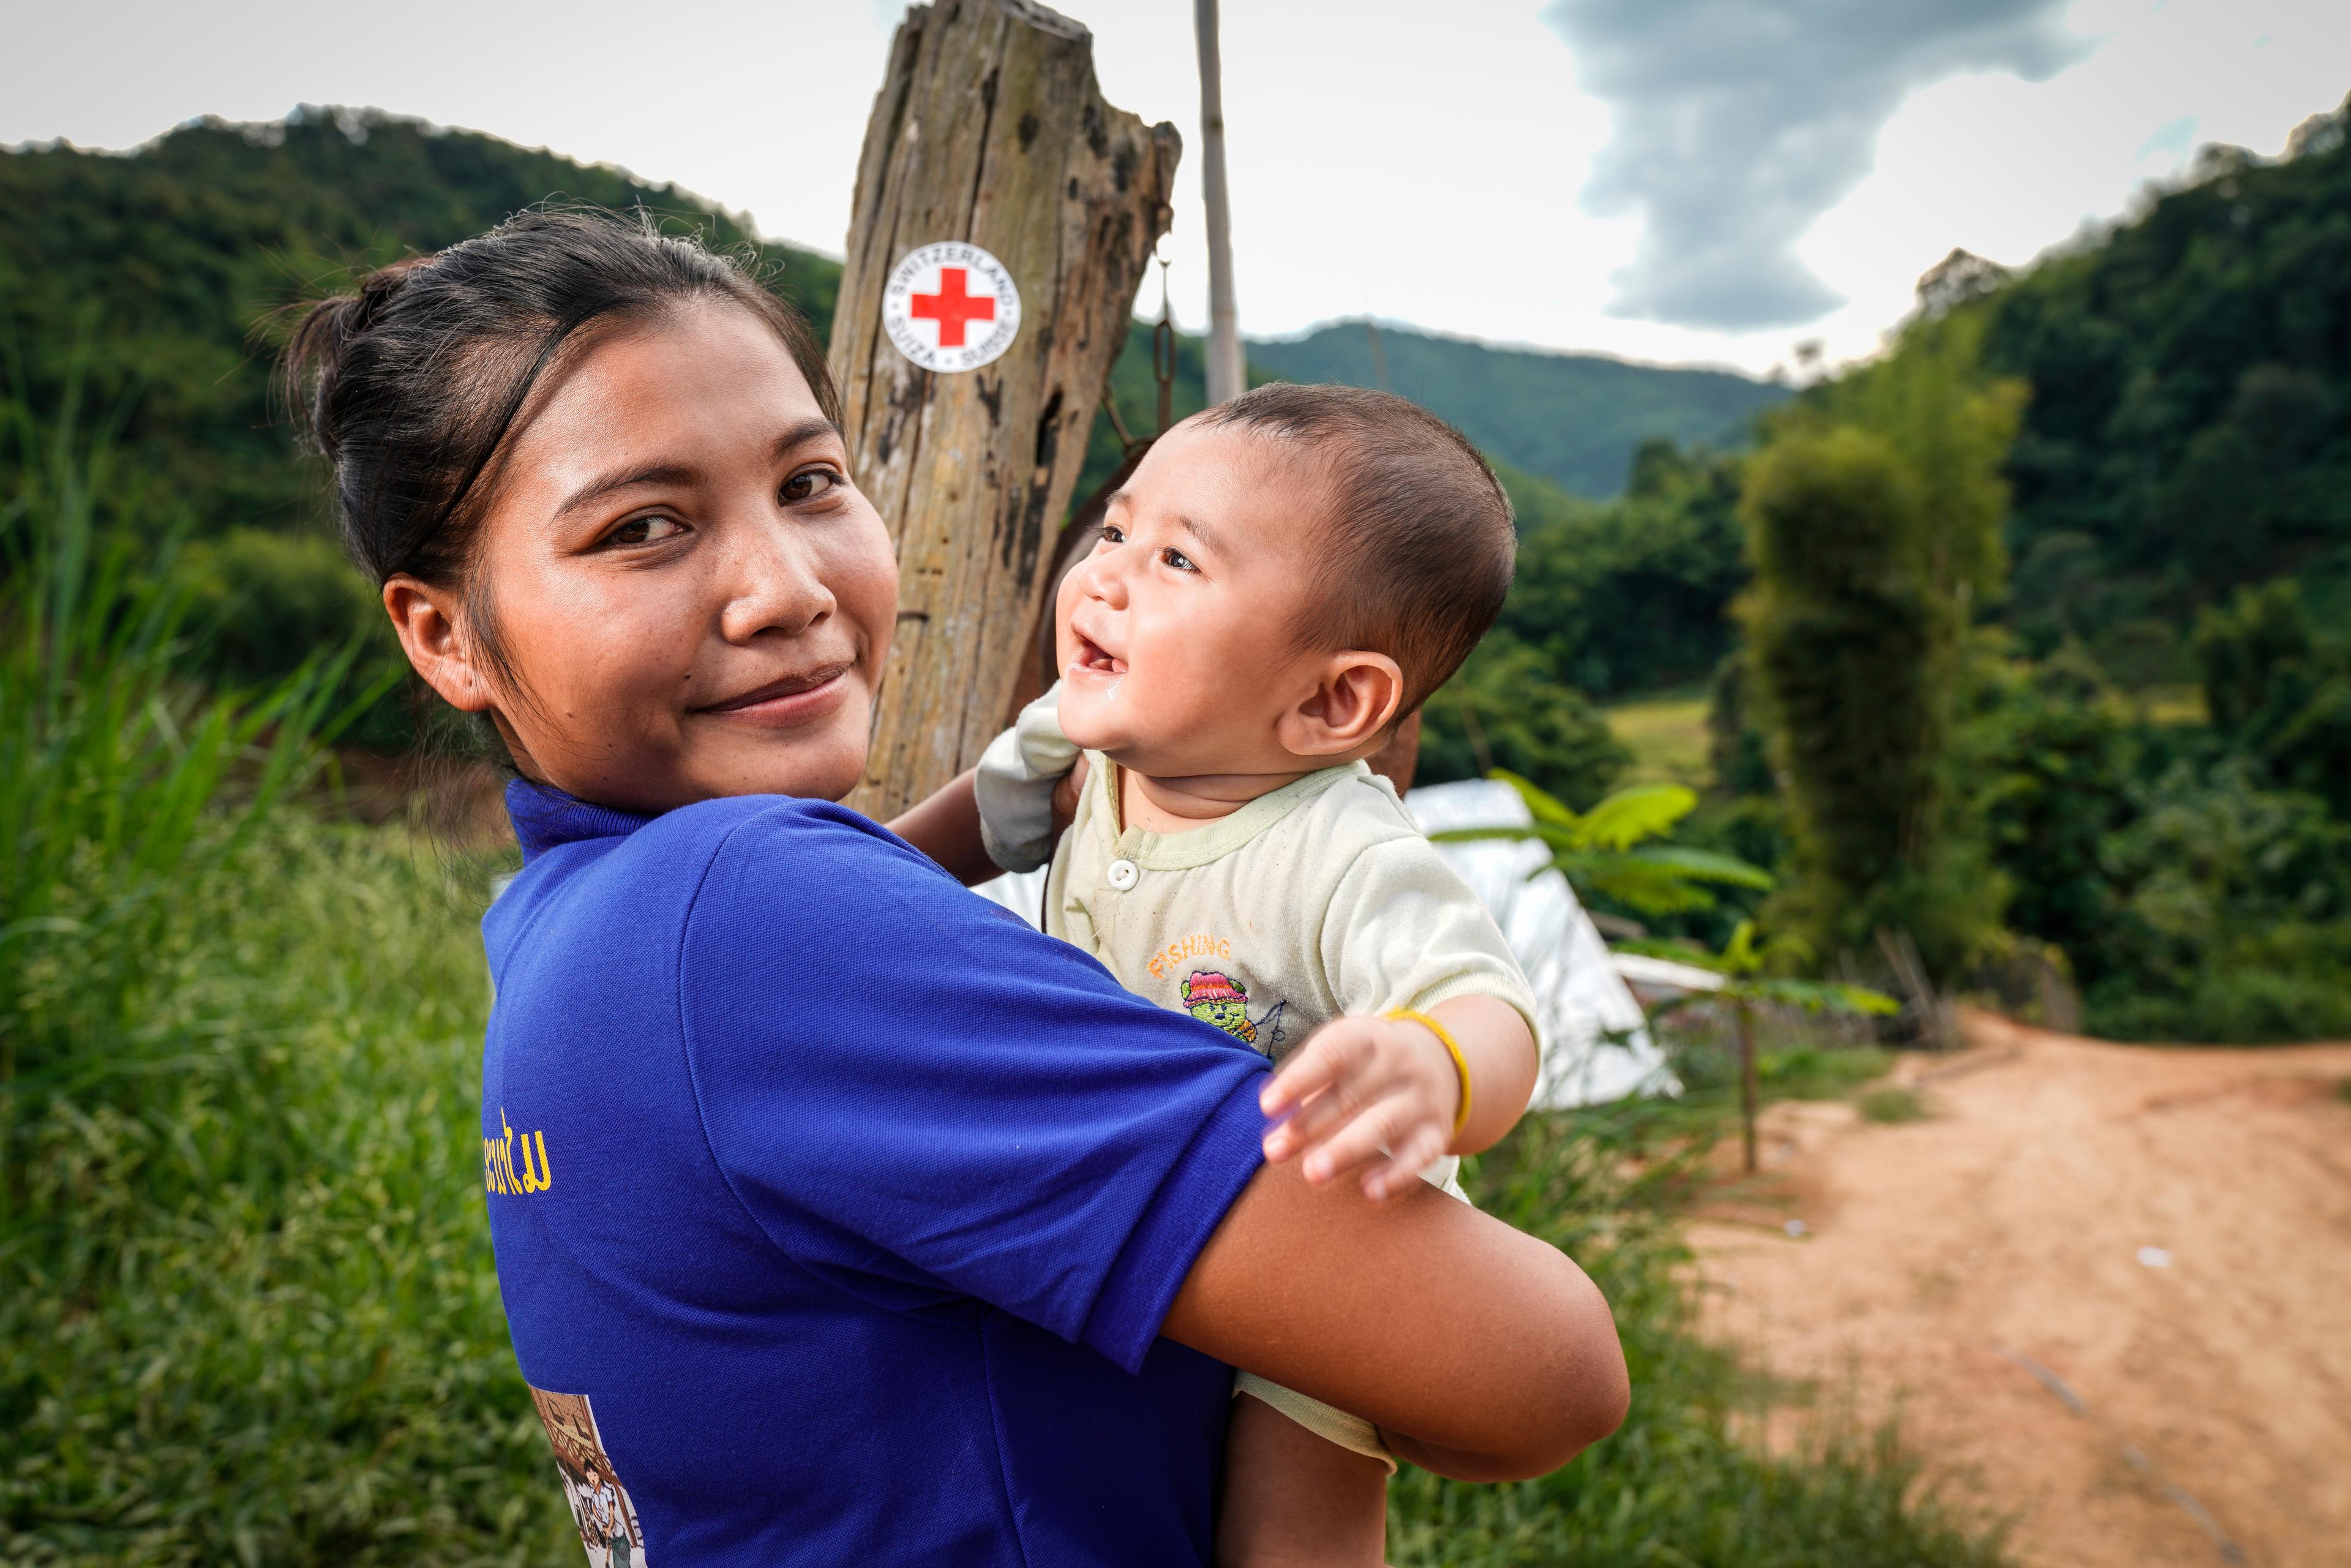 Oktober 2018: RK-Freiwillige mit Baby. (Sujet SRK Jahreskarte 2018) 
Sekundarschule Sopchia, Phonexay Distrikt; Provinz Luang Prabang, Laos